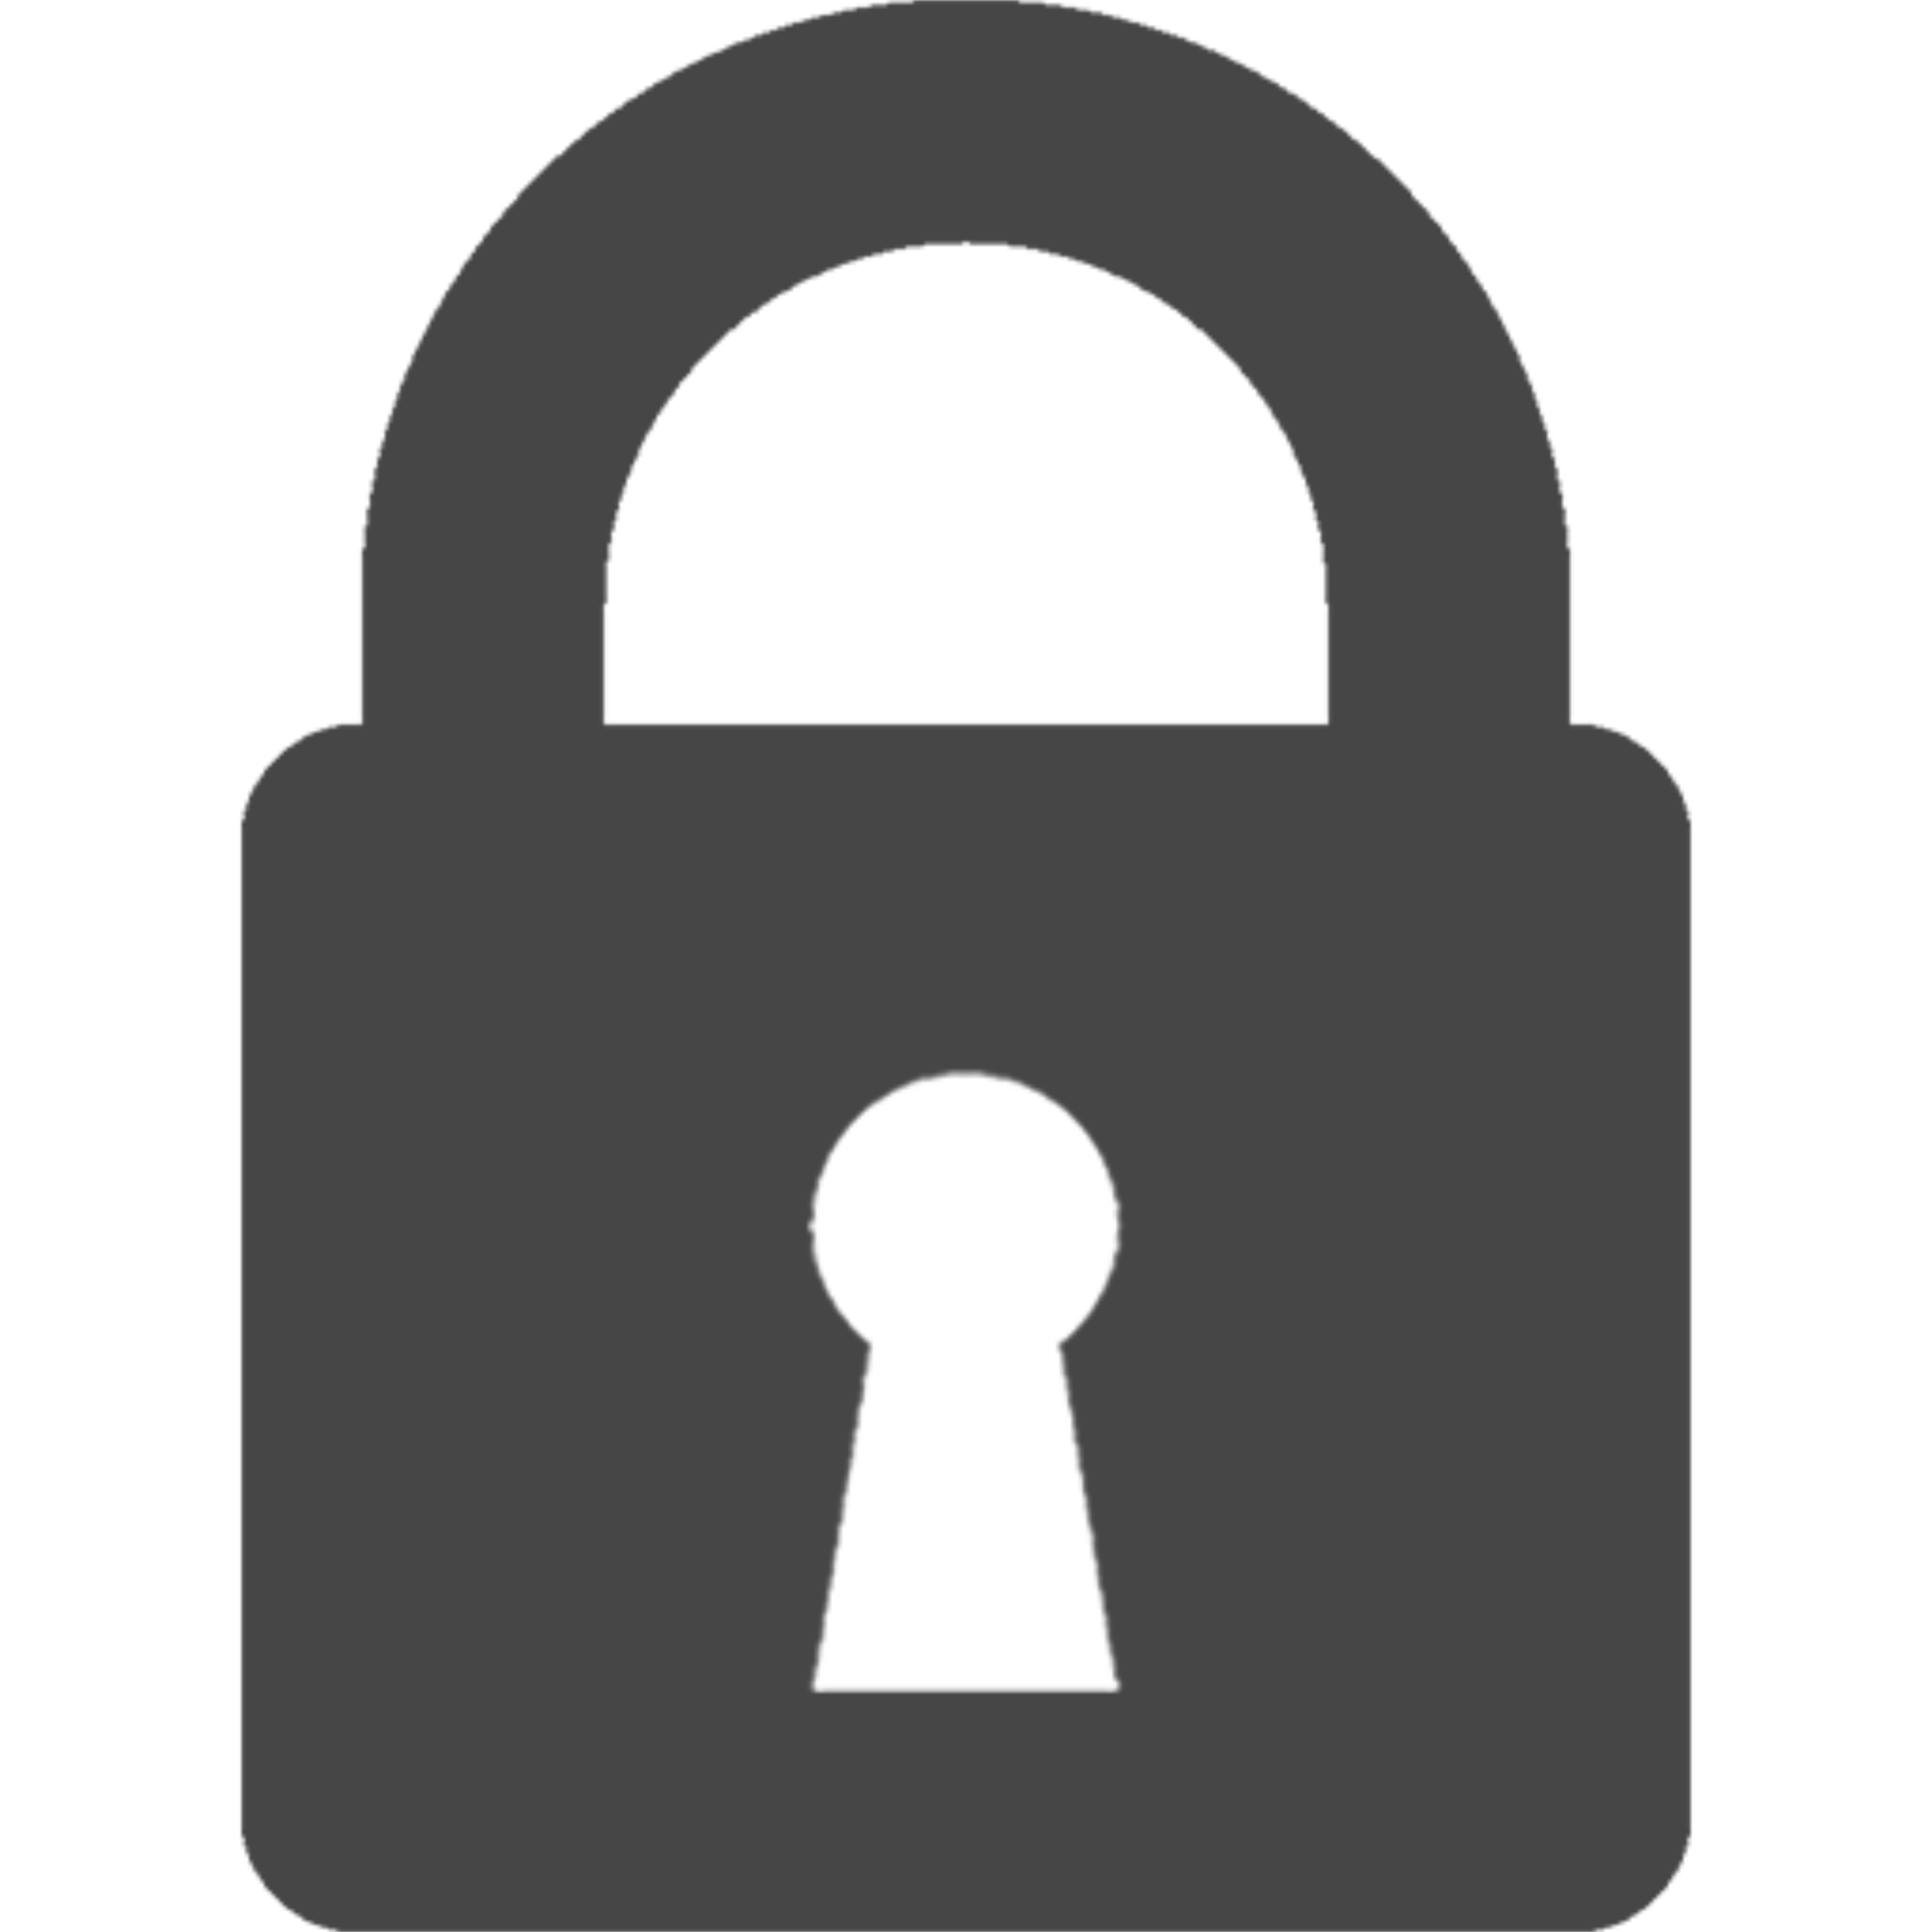 A padlock symbol.